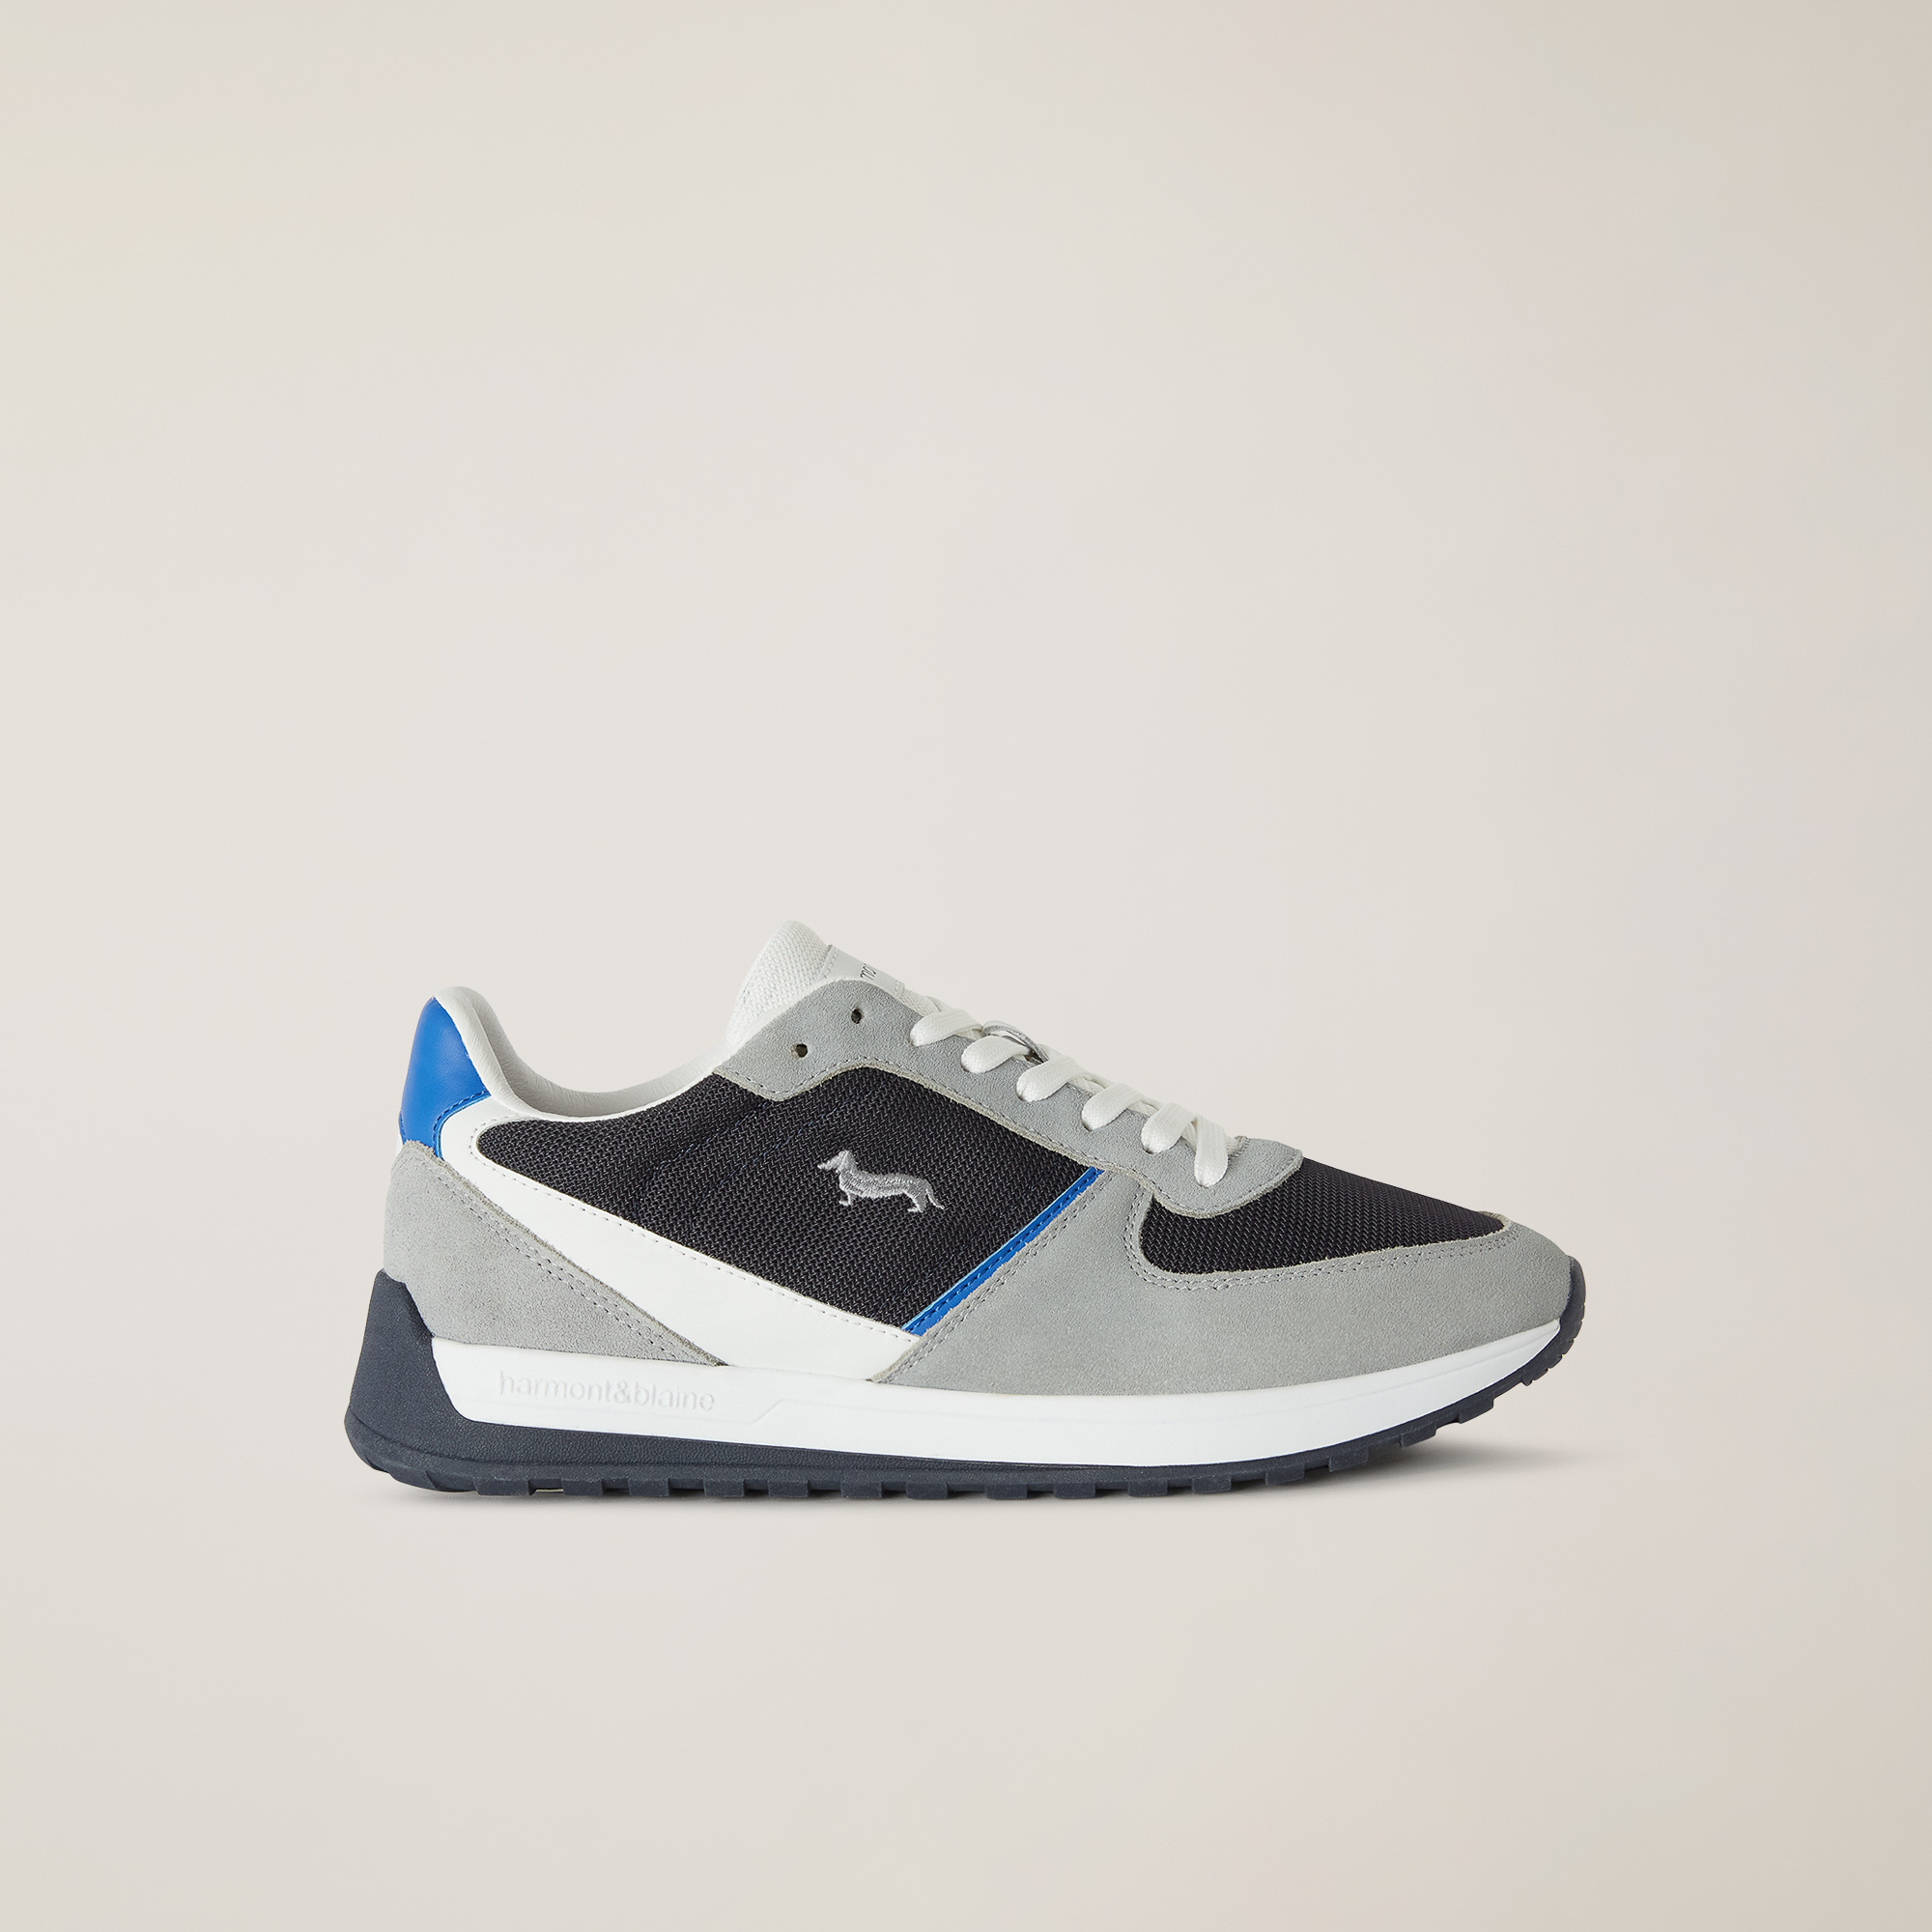 Sneaker mit zweifarbiger Sohle, Grau/Blau, large